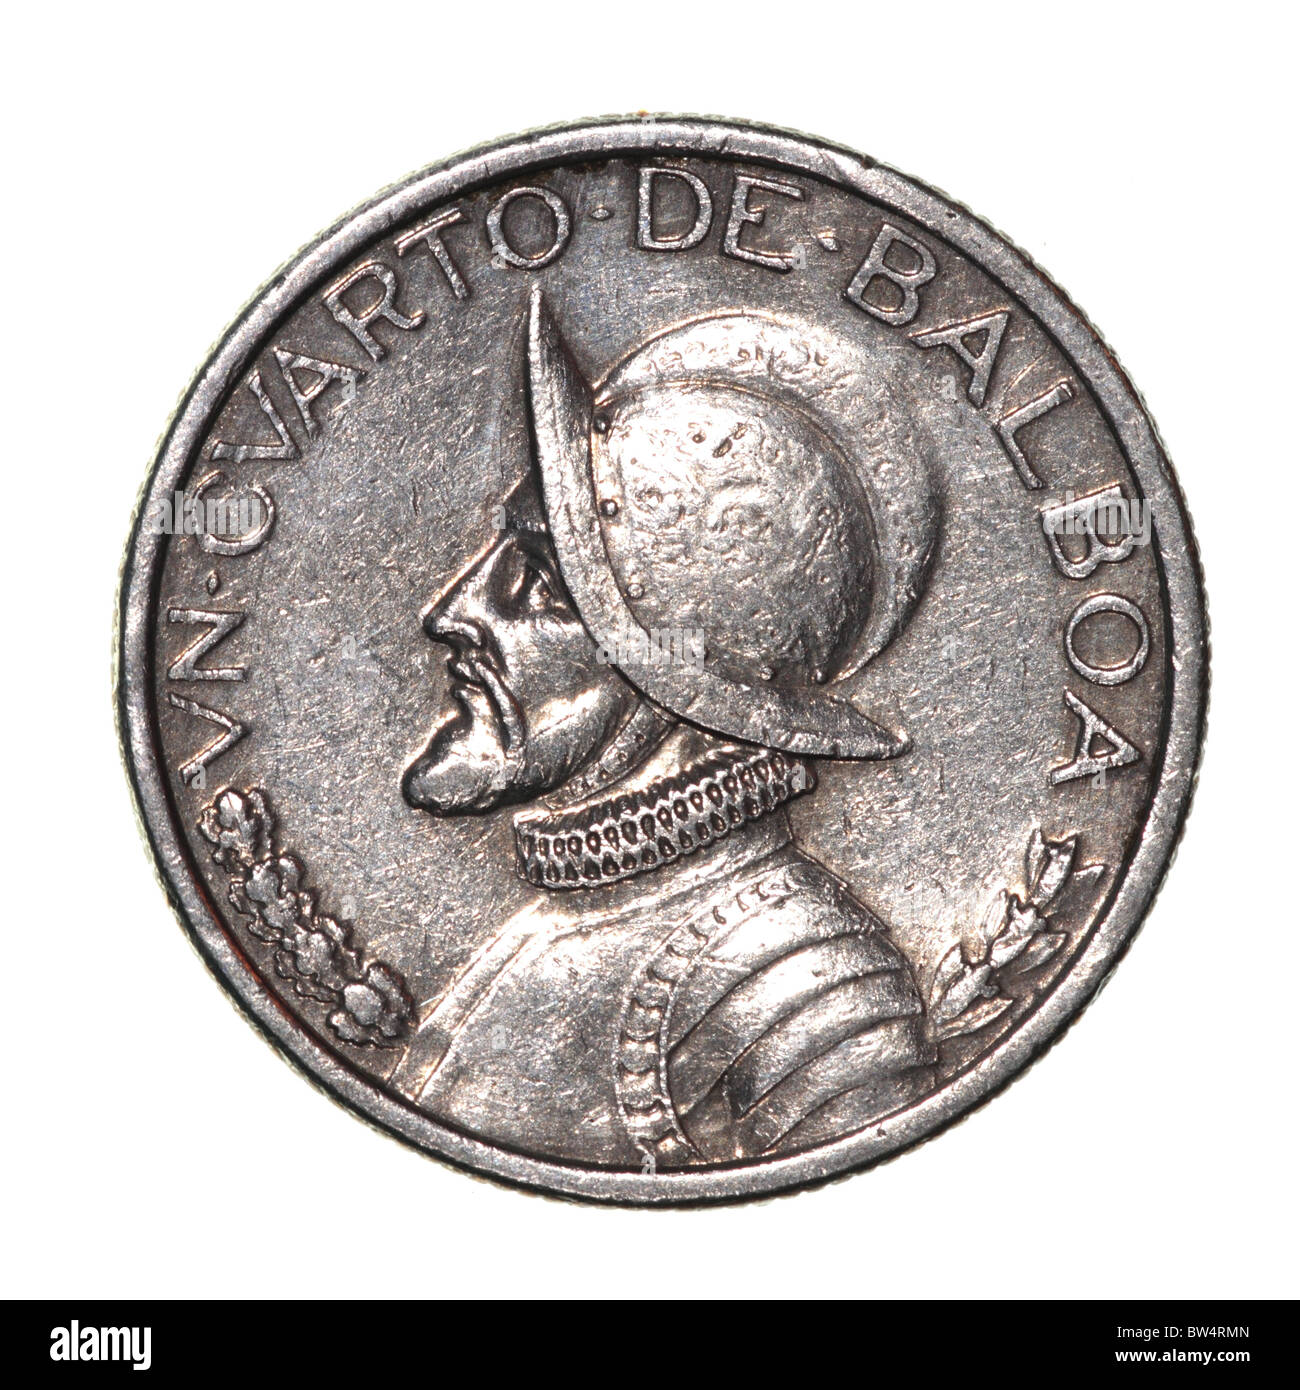 Obverse of a Panamanian quarter Balboa Coin featuring the portrait of Vasco Núñez de Balboa, conquistador. Macro image isolated on a white background. Stock Photo